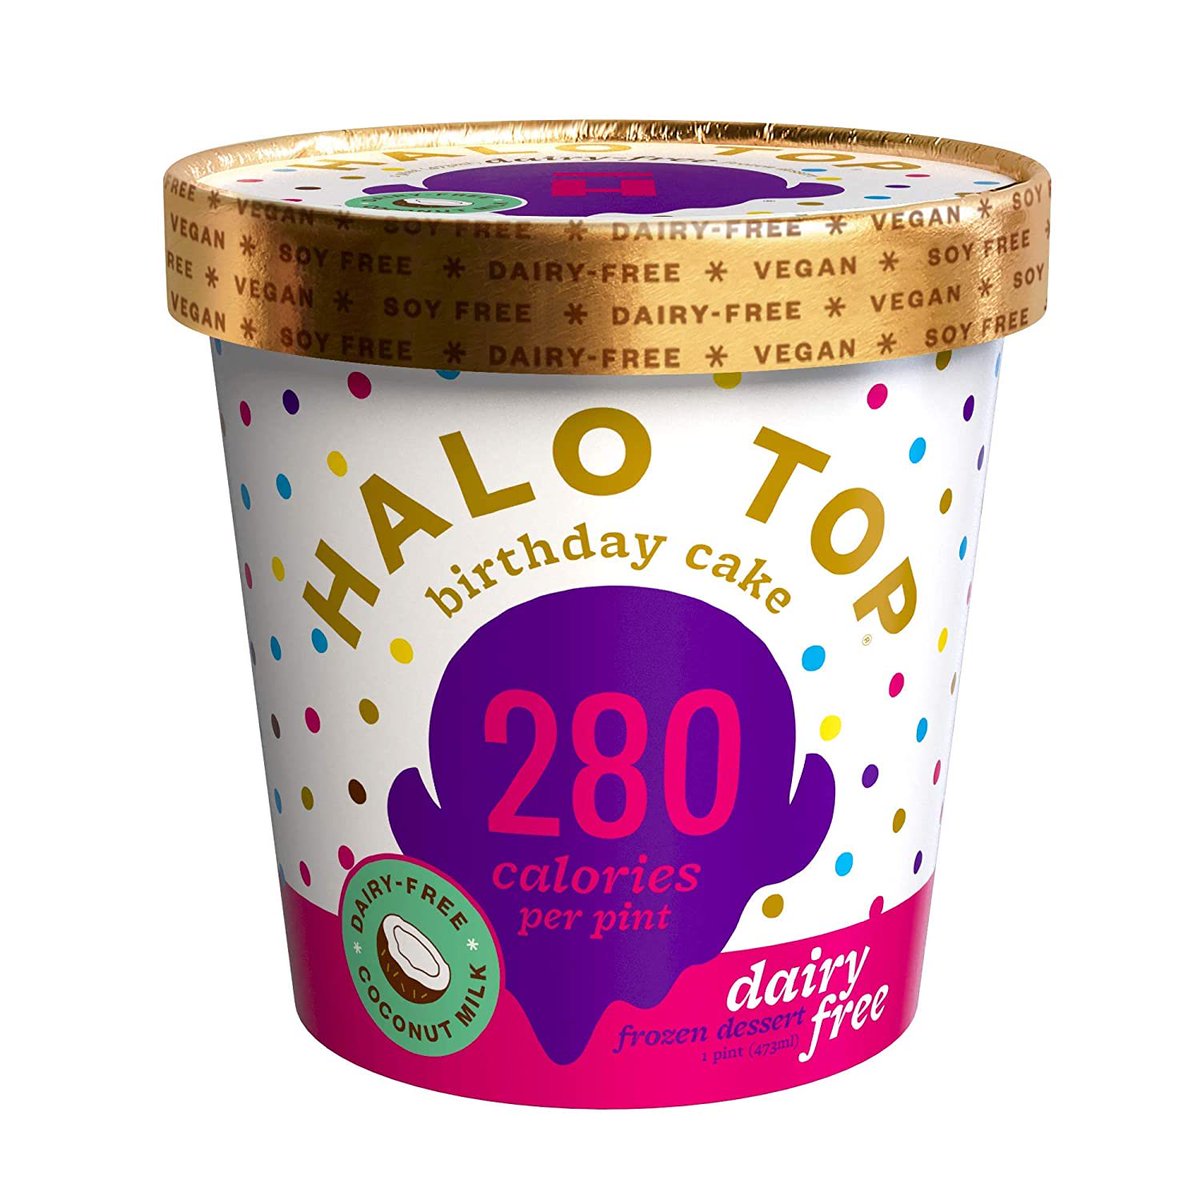 Brand: Halo Top- dairy free halo top wee woo wee wooChocolate - 280cals per pintChocolate Almond Crunch - 310cals per pintBirthday Cake - 310cals per pintSea Salt Caramel - 320cals per pint